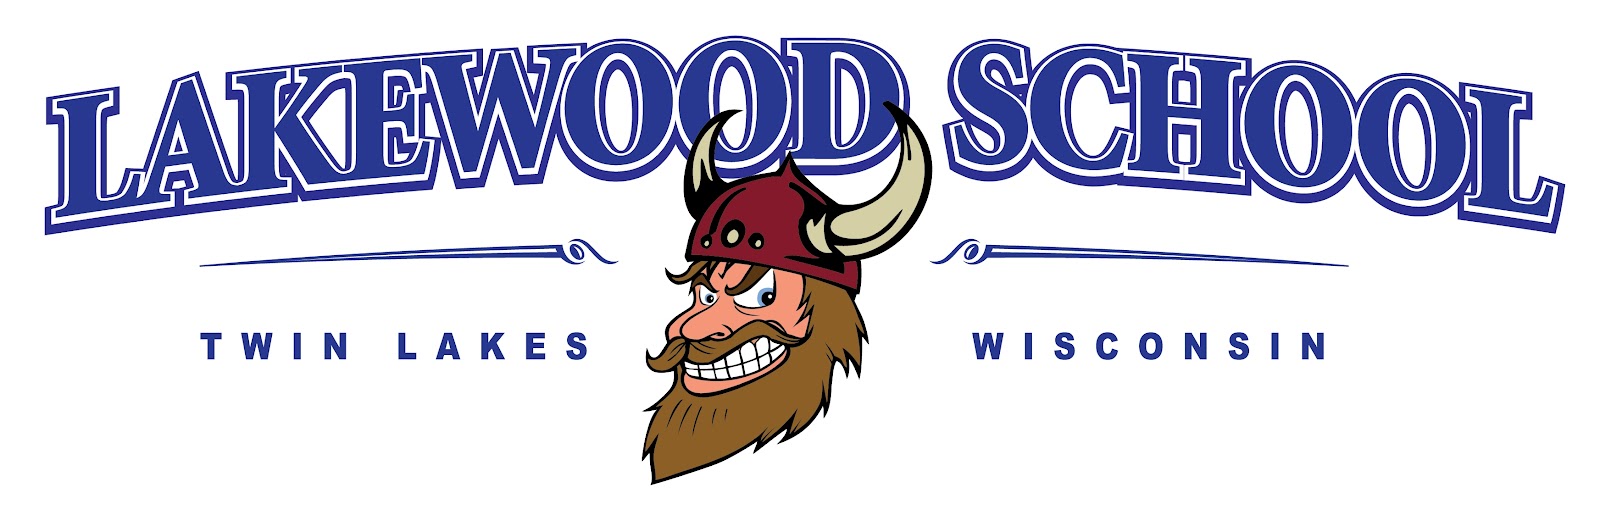 Lakewood_Blue Logo Banner_Color.JPG